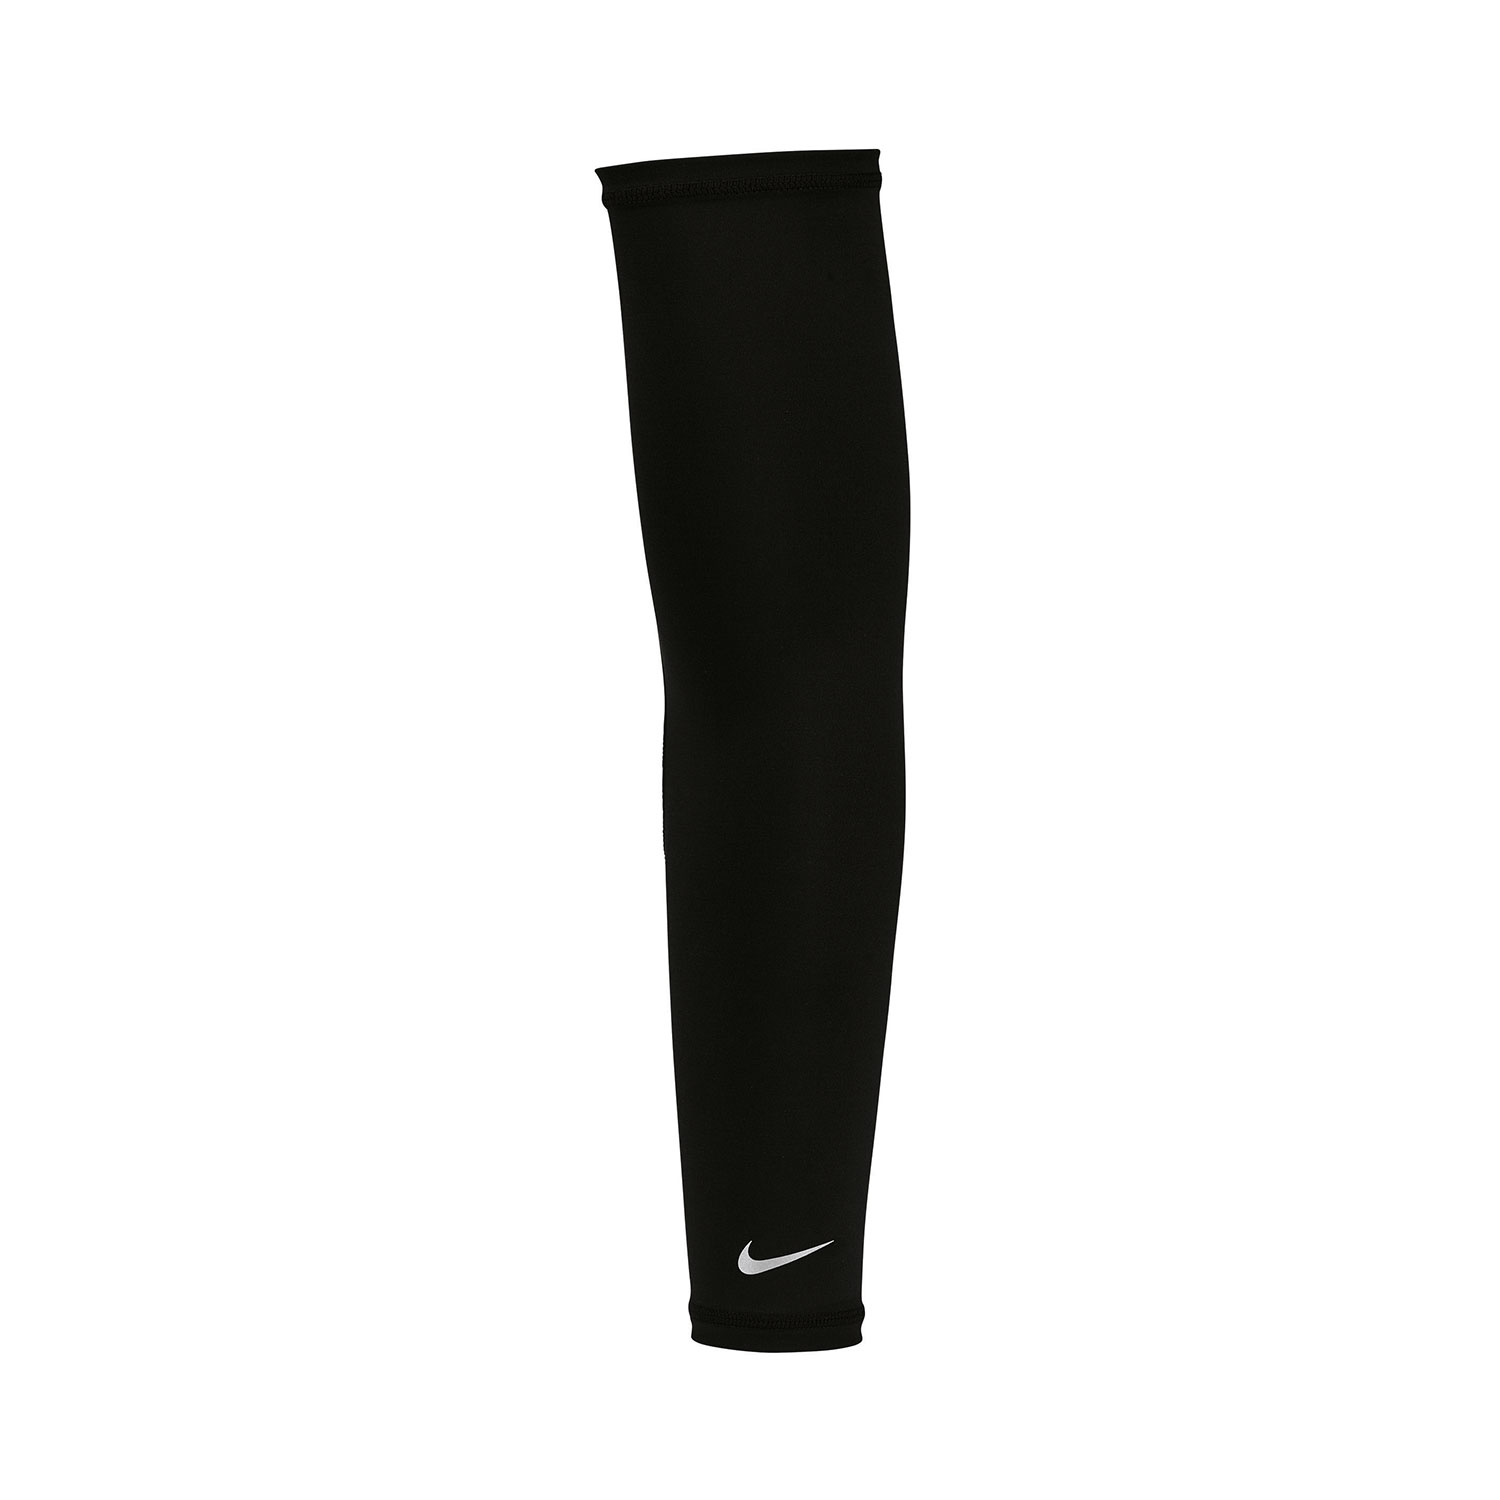 Nike Dri-FIT UV Running Sleeves - Black/Silver